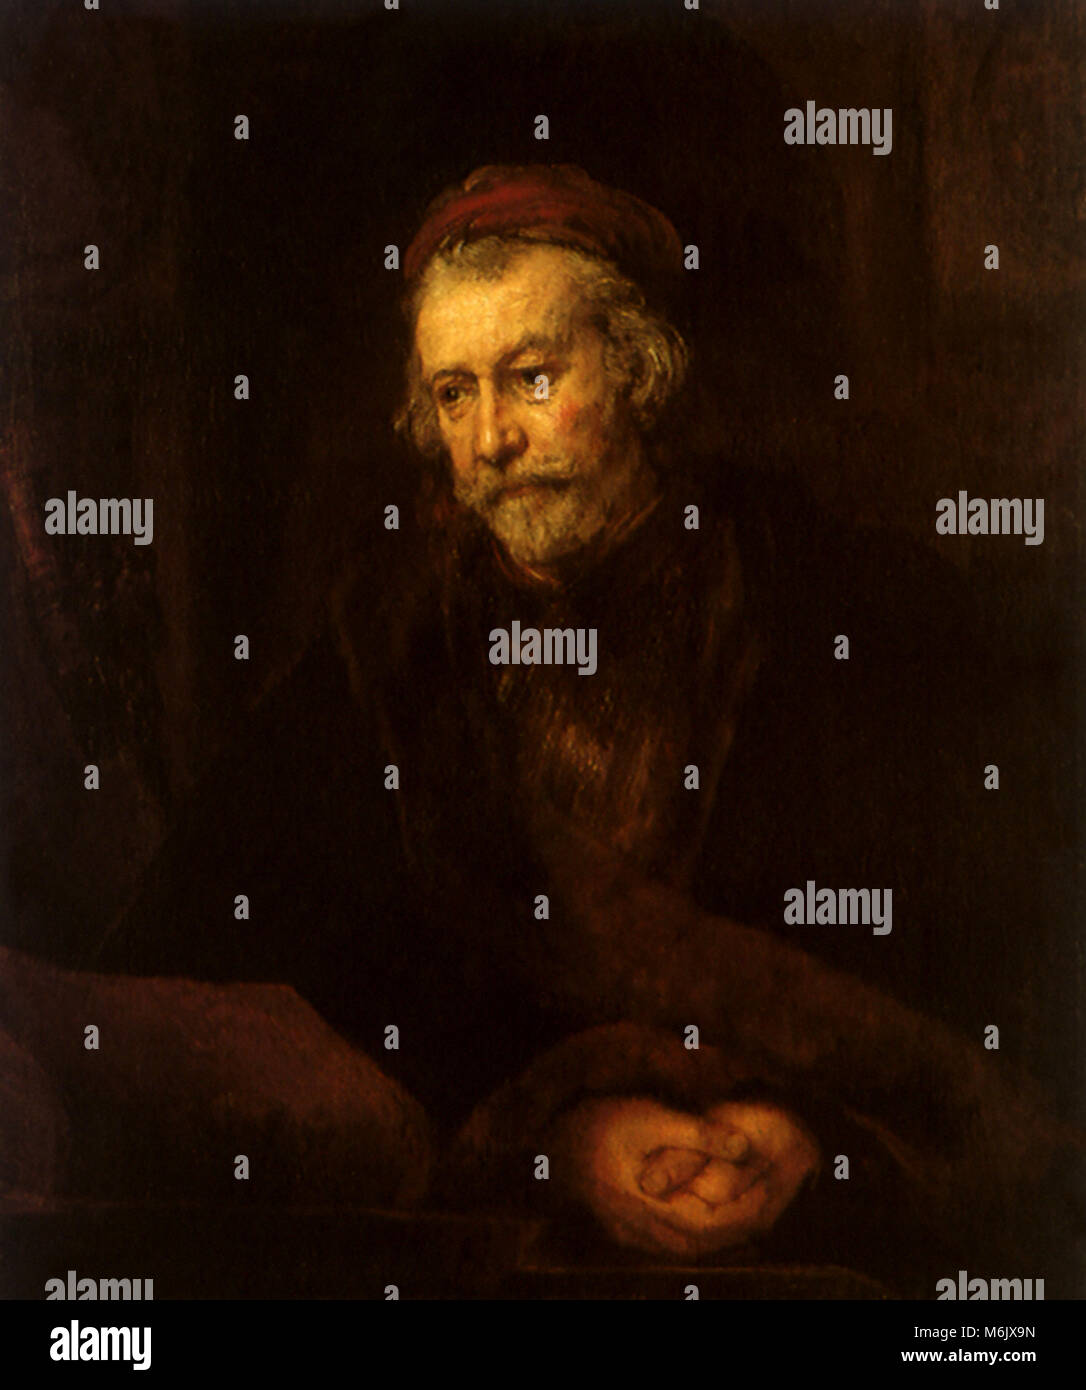 Un vecchio uomo come San Paolo, Rembrandt Harmensz van Rijn, 1659. Foto Stock